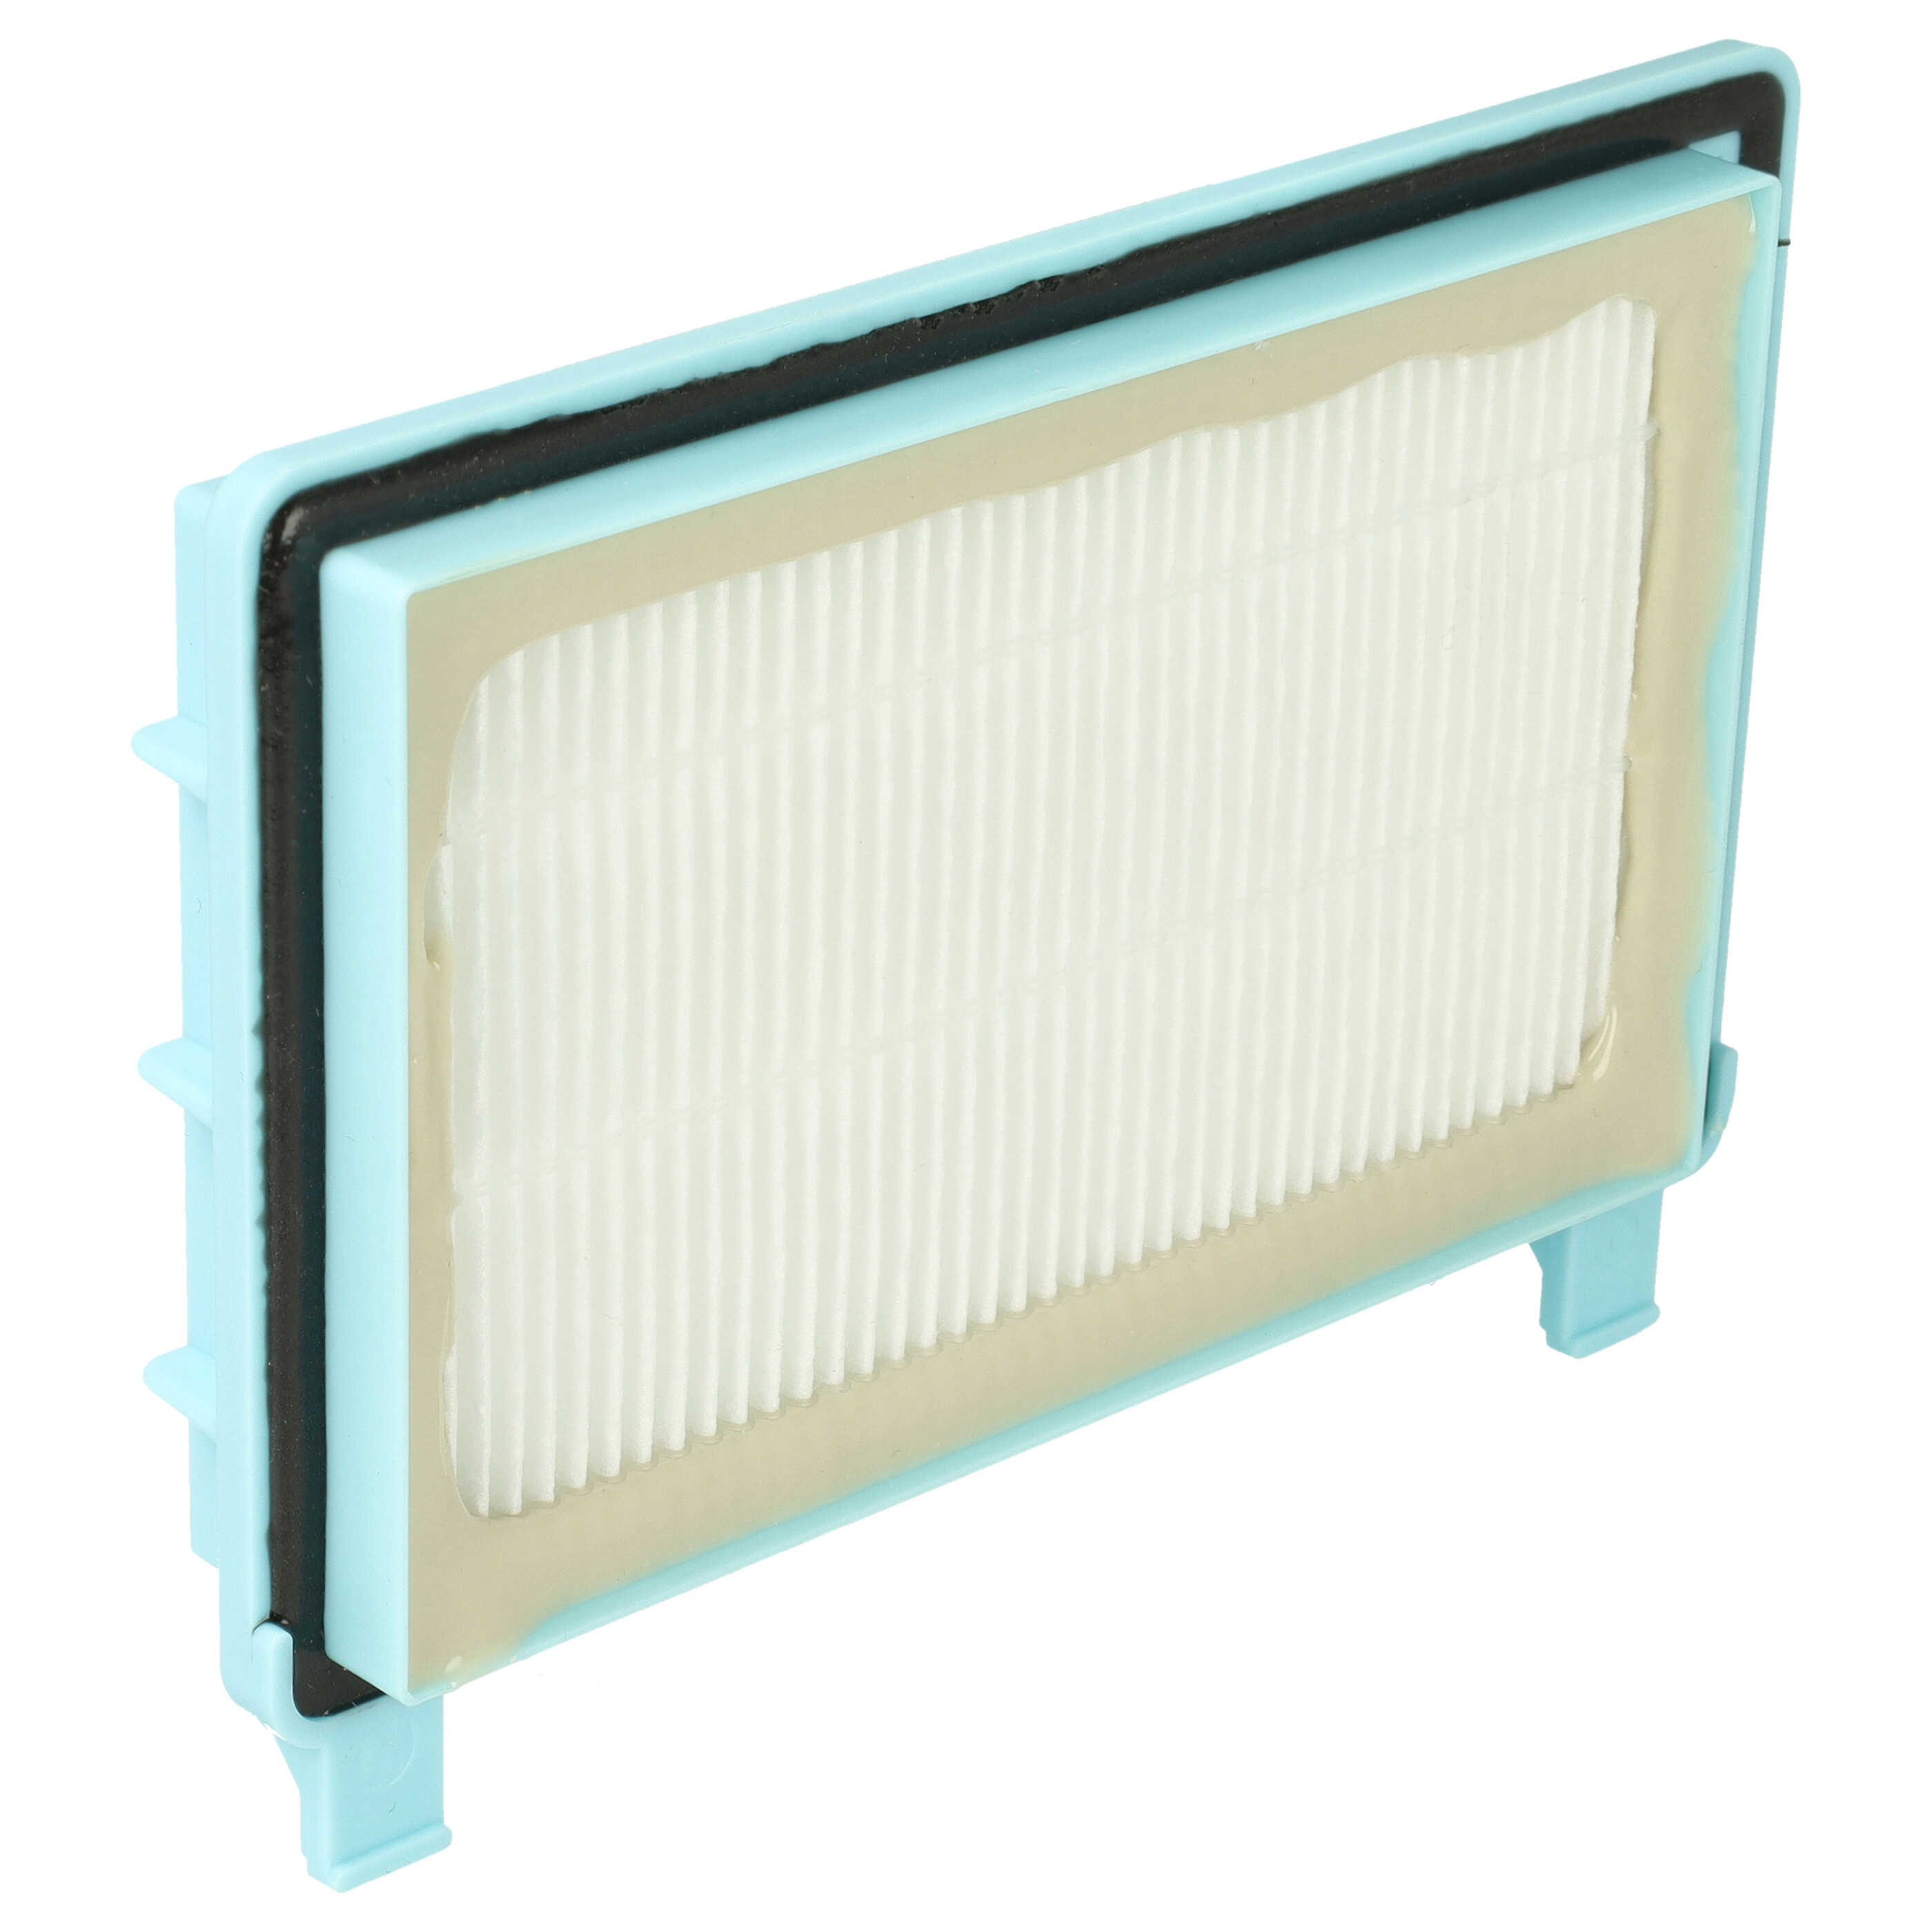 1x HEPA filter replaces Philips 491669, 883804401810, 432200039090, 883804401010 for PhilipsVacuum Cleaner